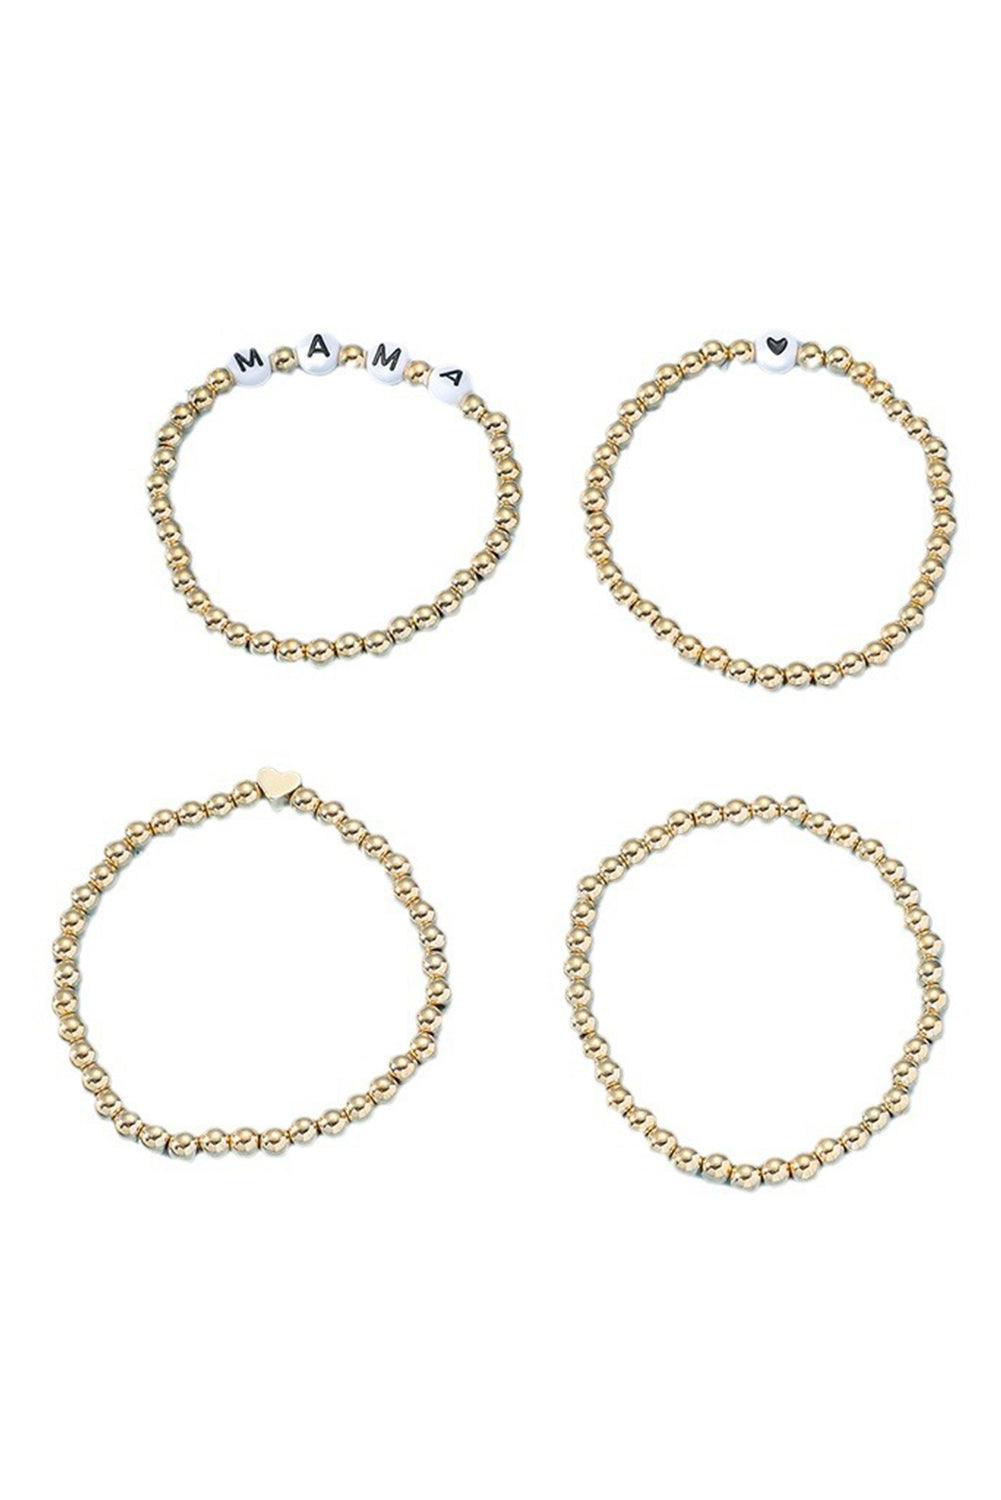 Gold MAMA Heart Bead 4Pcs Bracelets Set